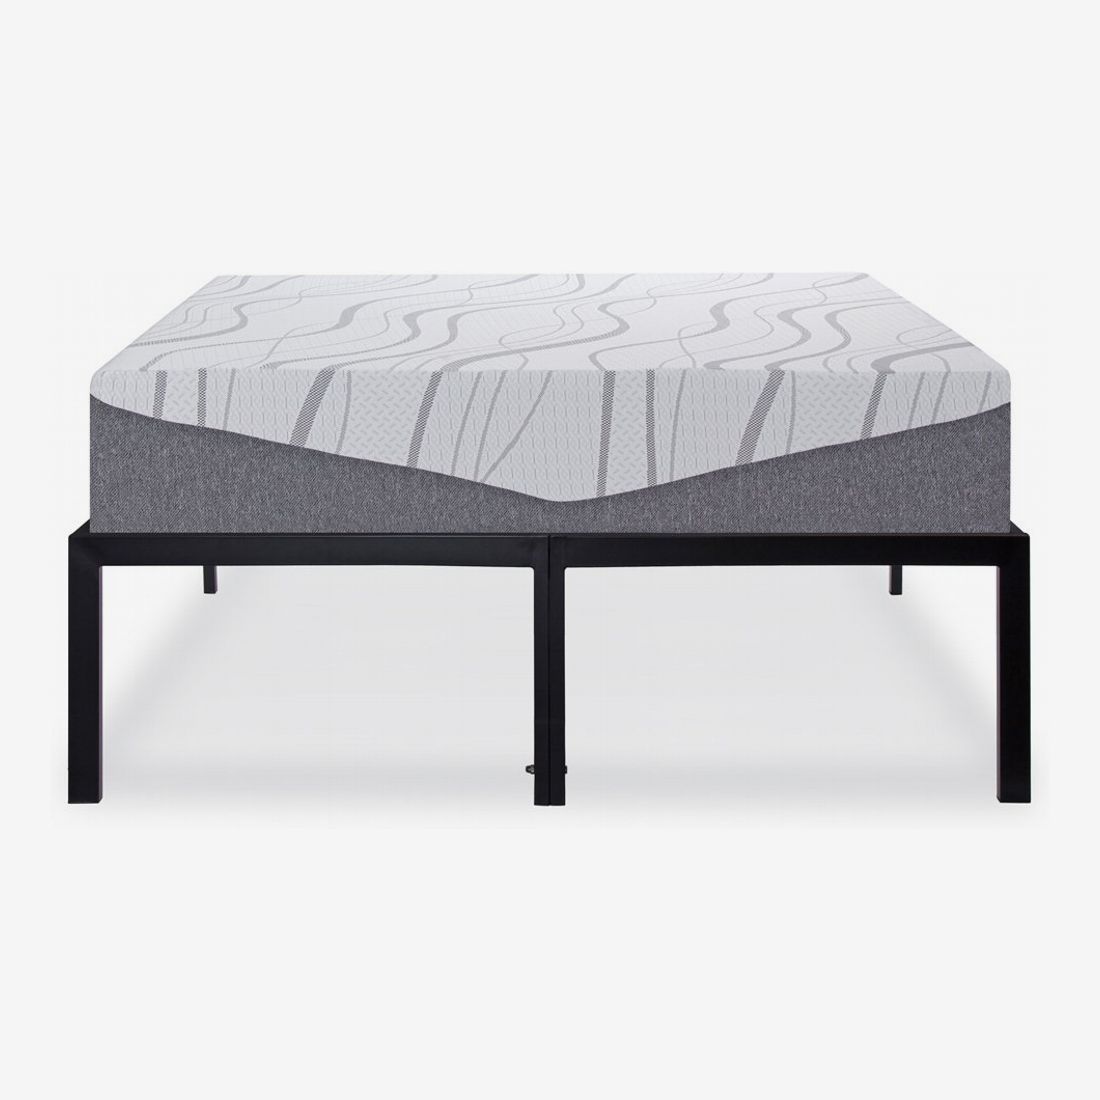 19 Best Metal Bed Frames 2020 The, 18 Inch High Bed Frame